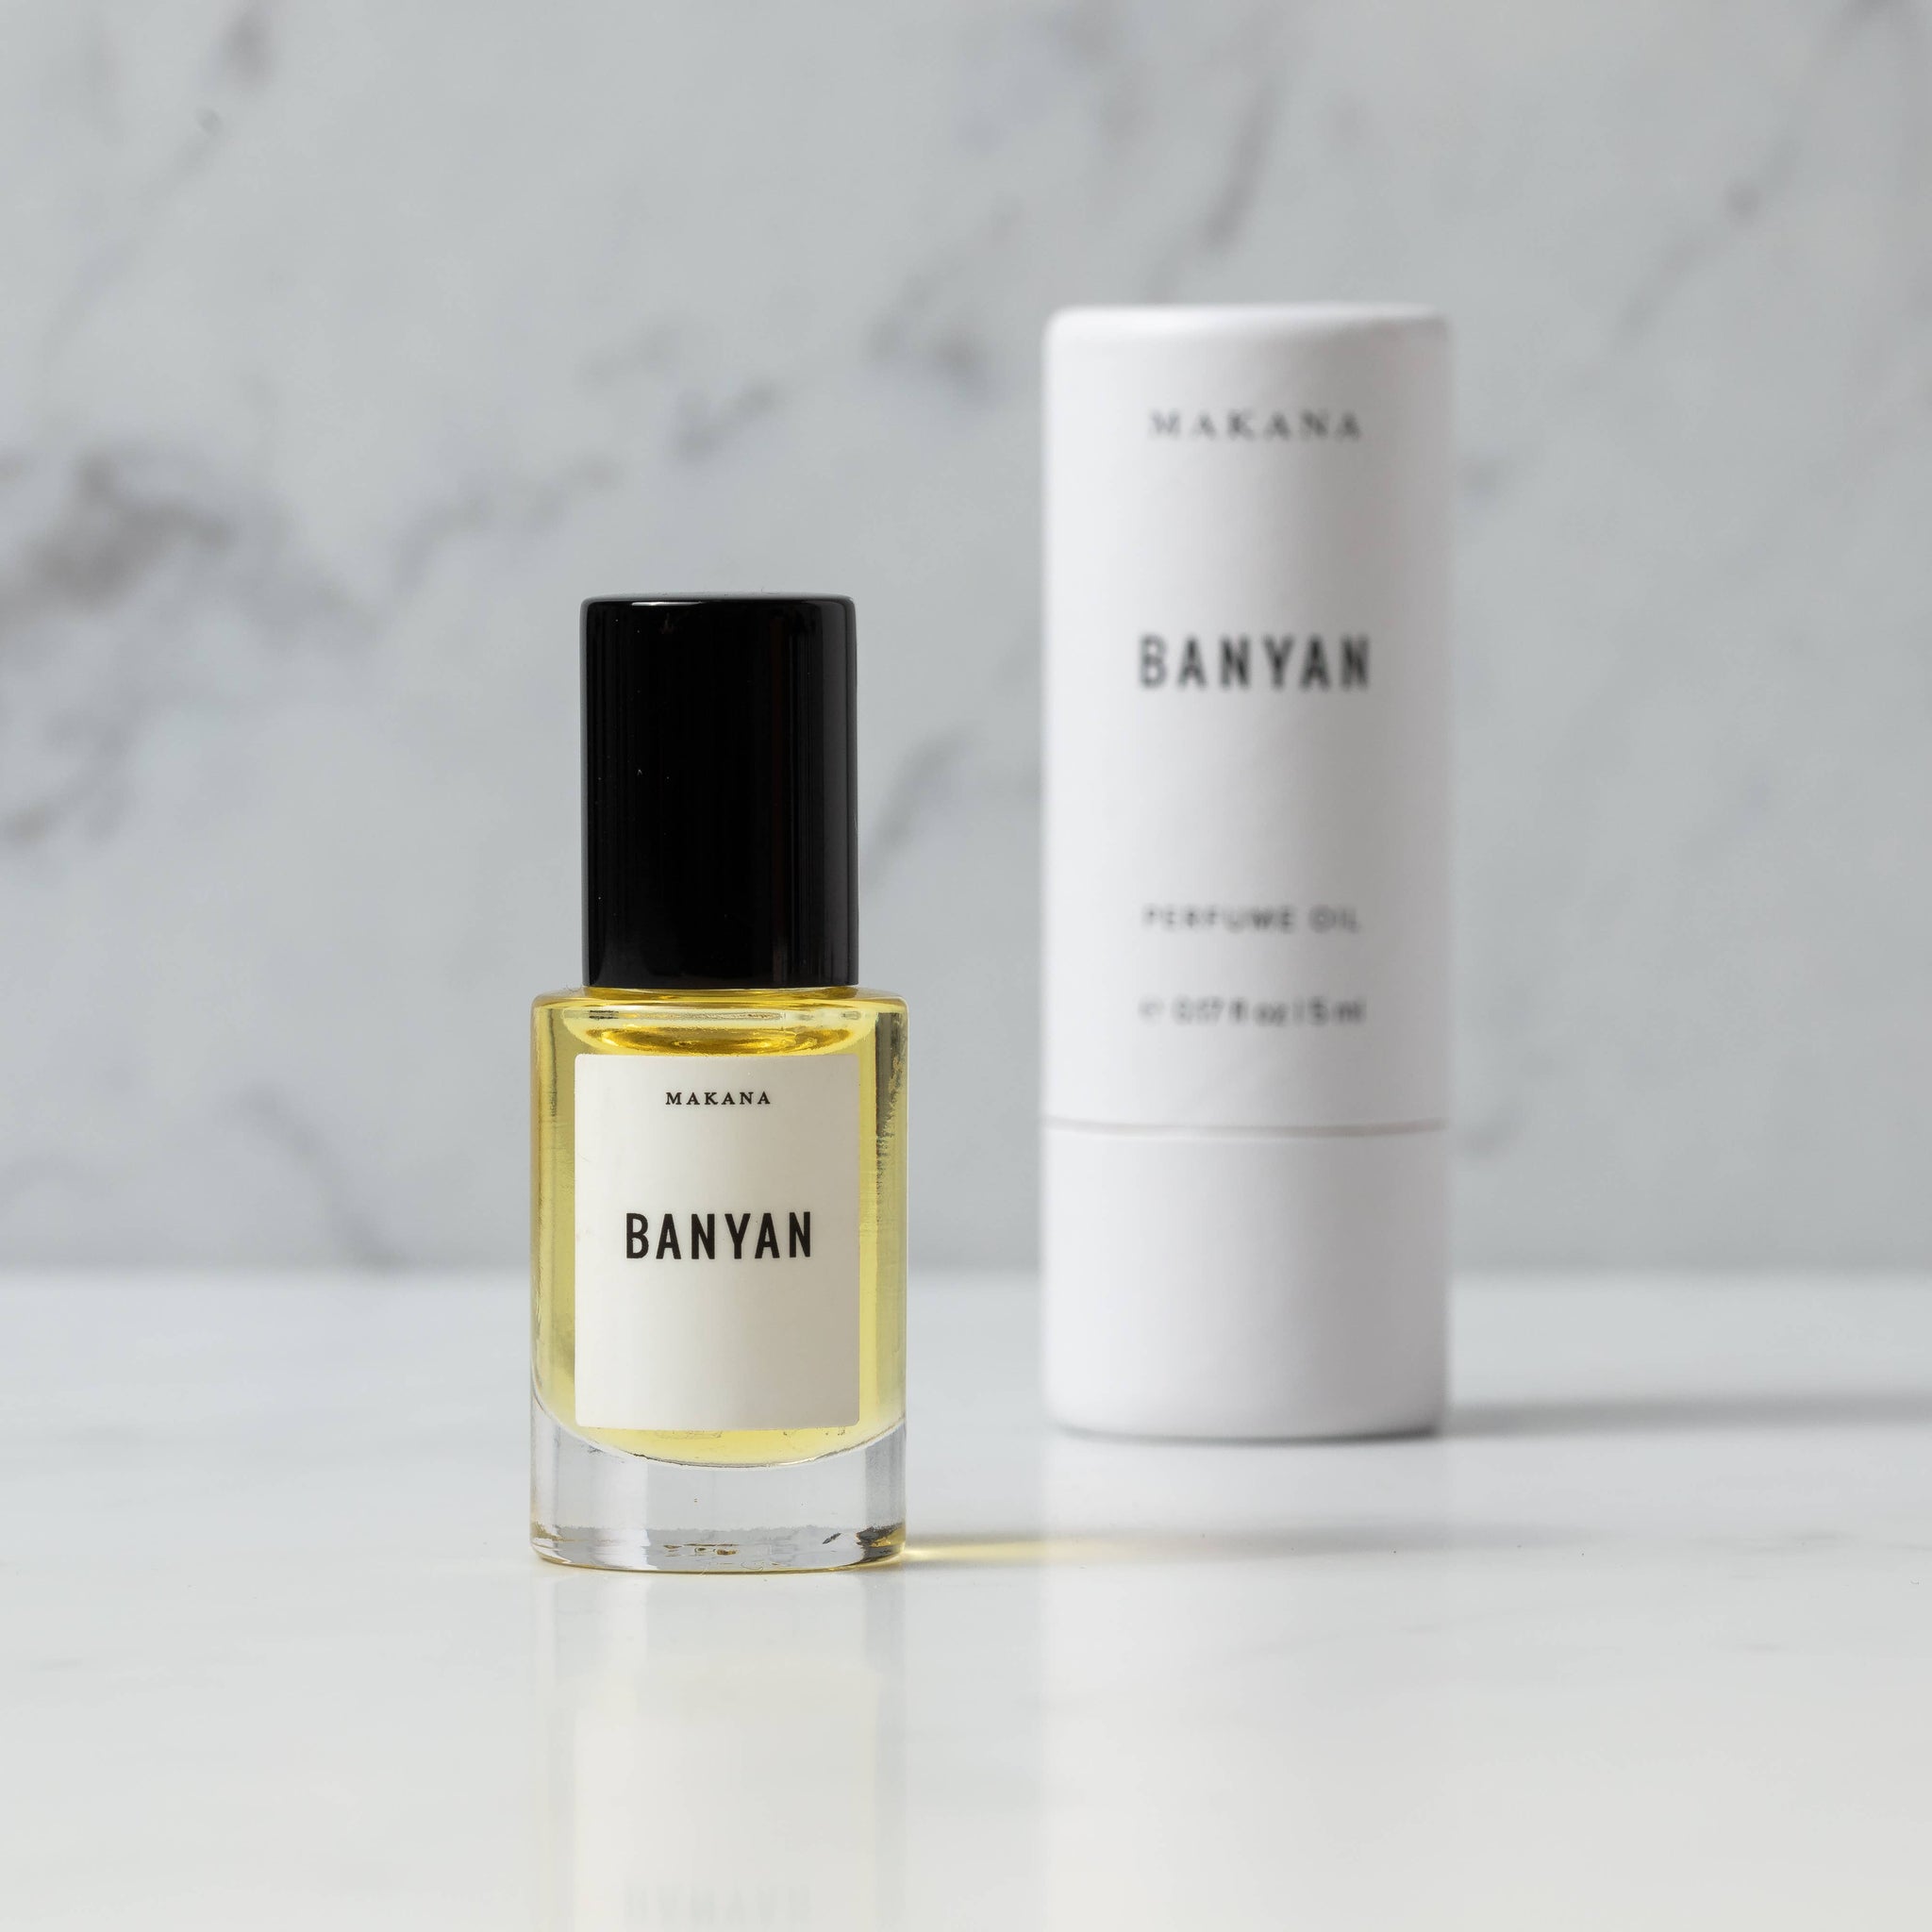 Banyan 5ml Perfume Oil